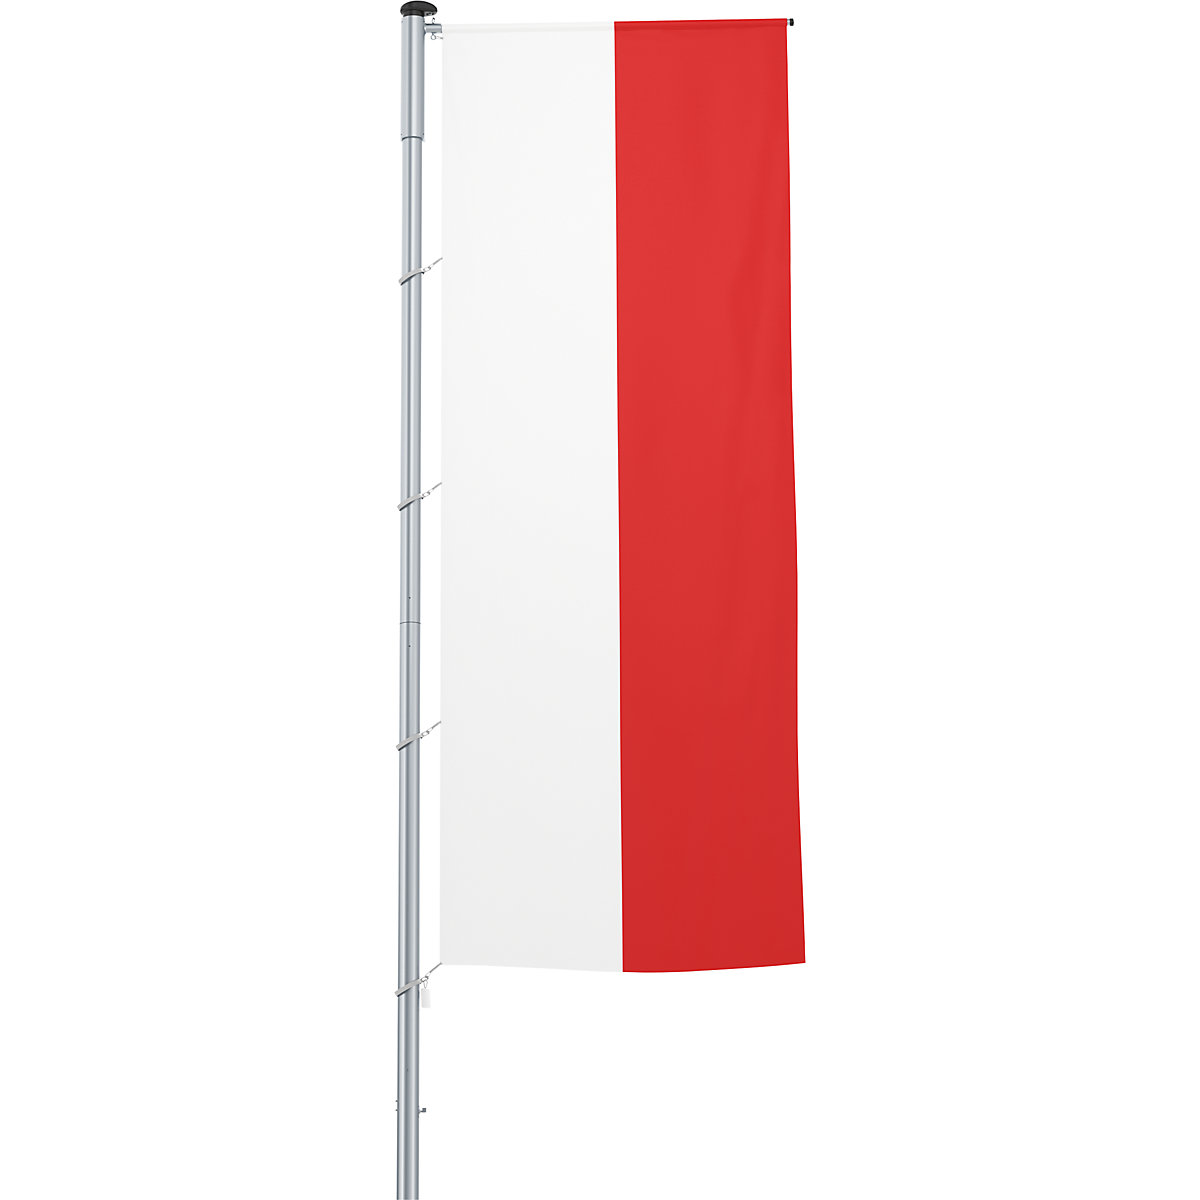 Steag pentru braț/drapel național – Mannus, format 1,2 x 3 m, Polonia-3